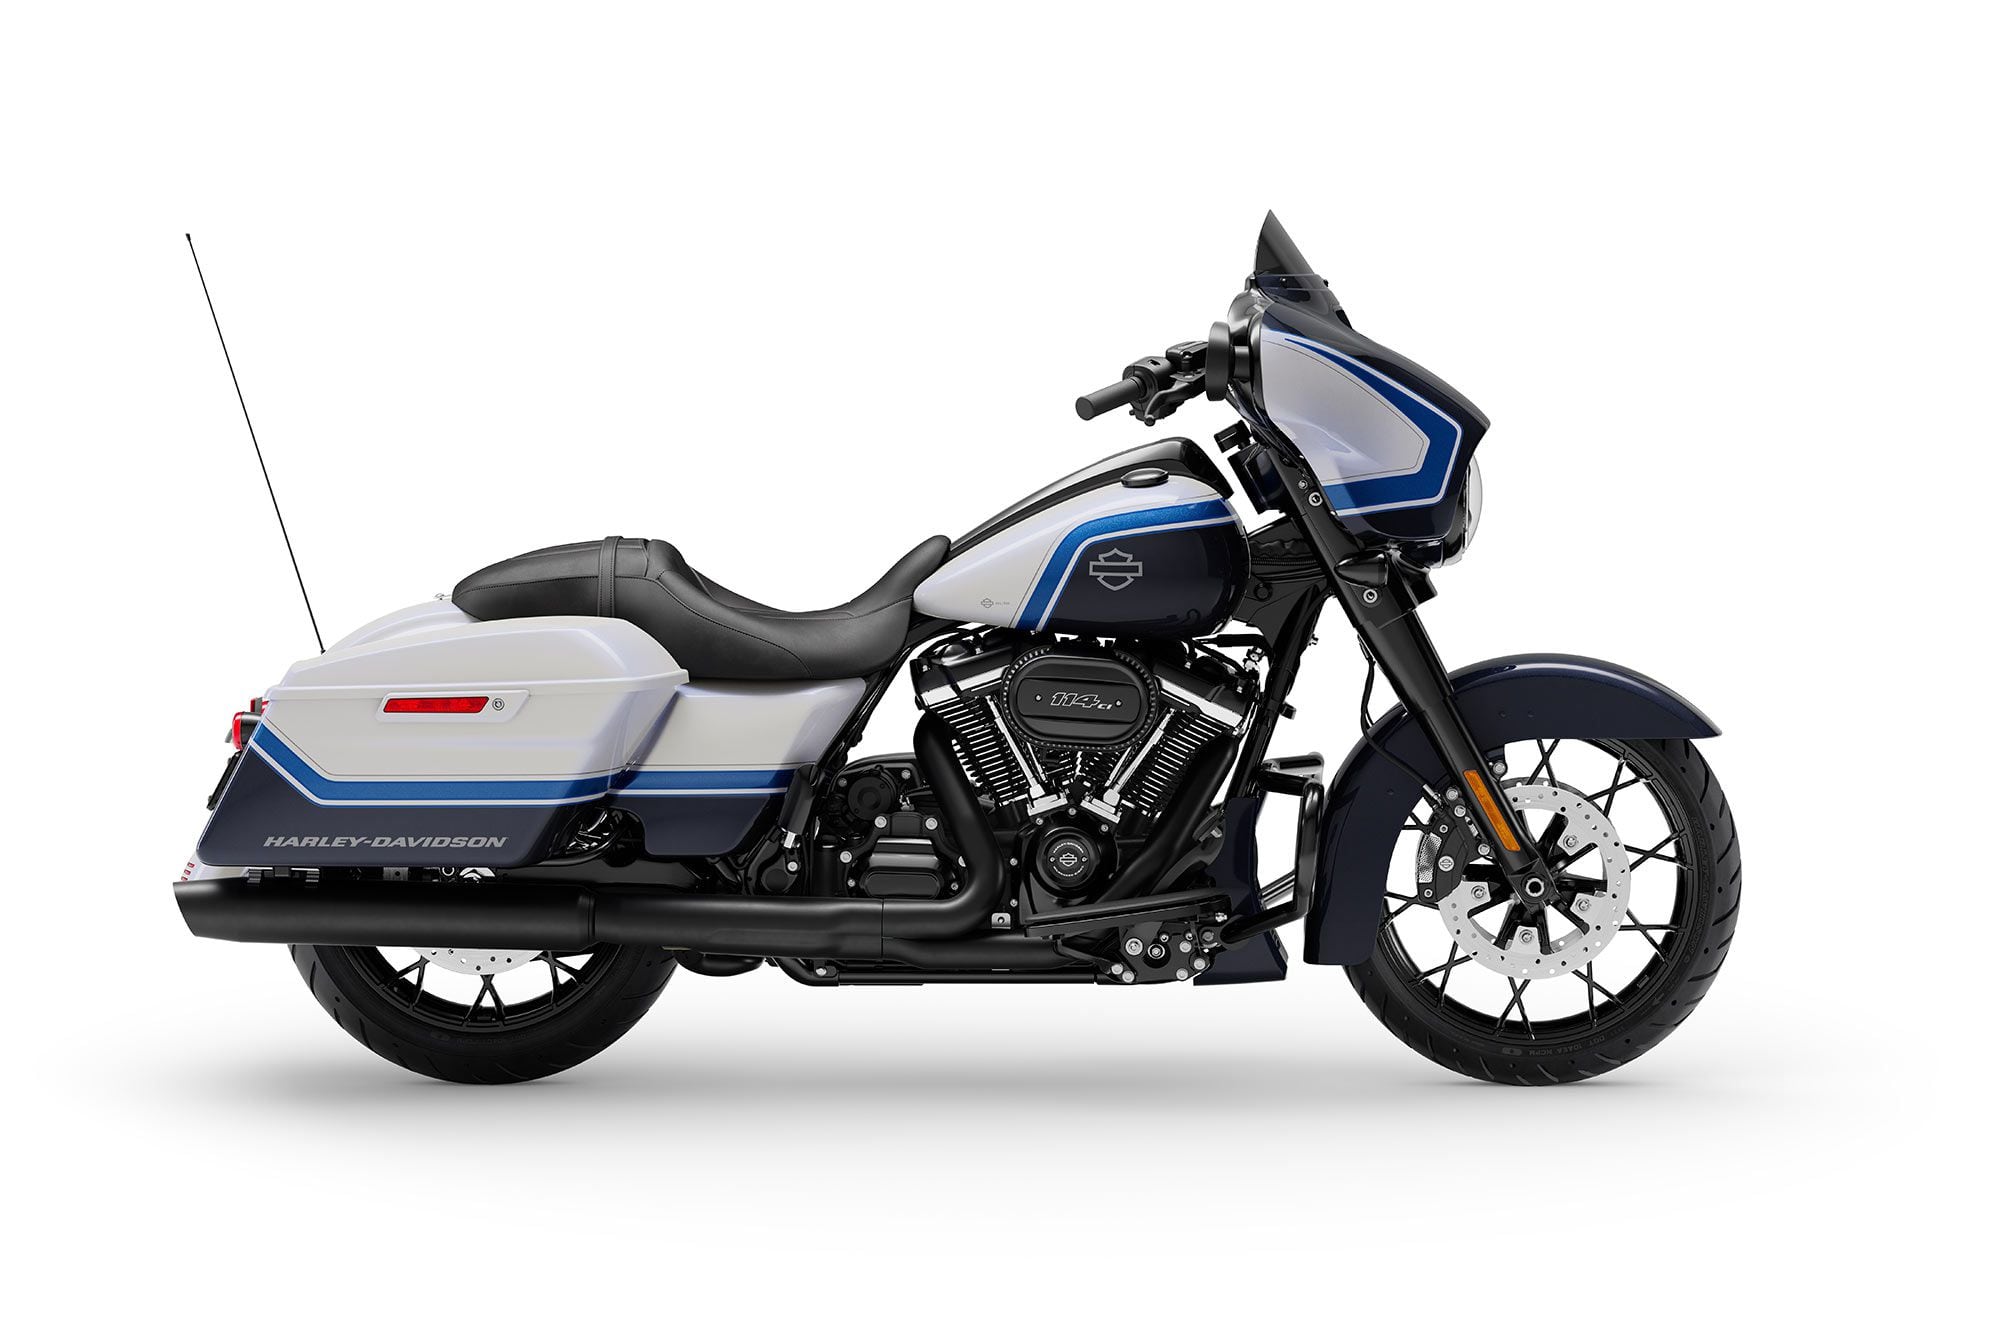 2021 Harley Davidson Street Glide Special In Limited Arctic Paint Scheme Superbike Photos